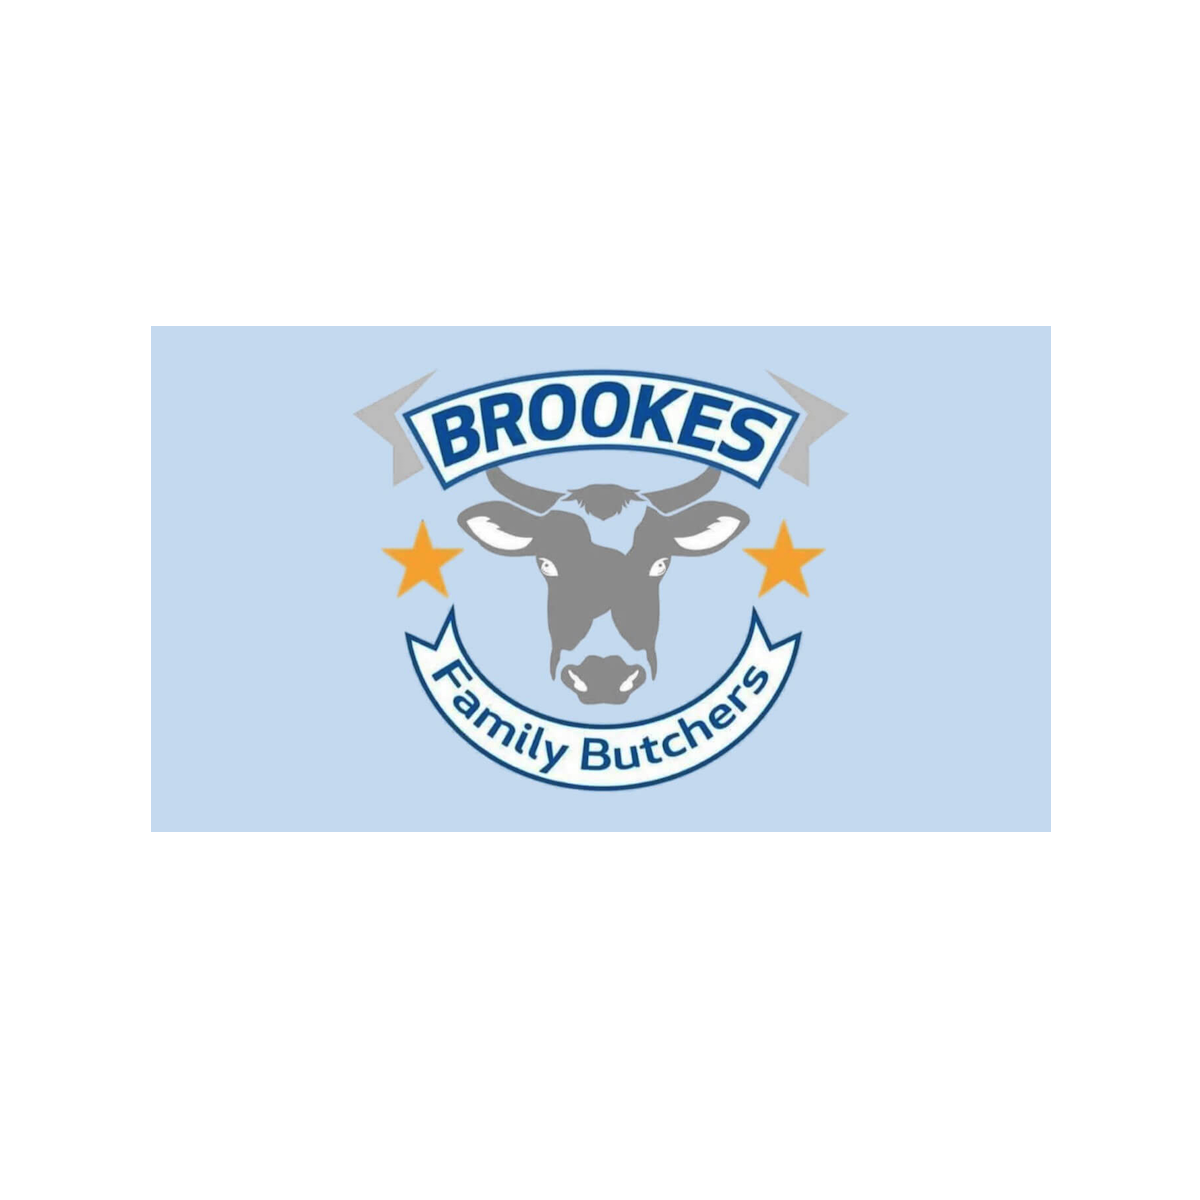 Brookes Butchers brand logo